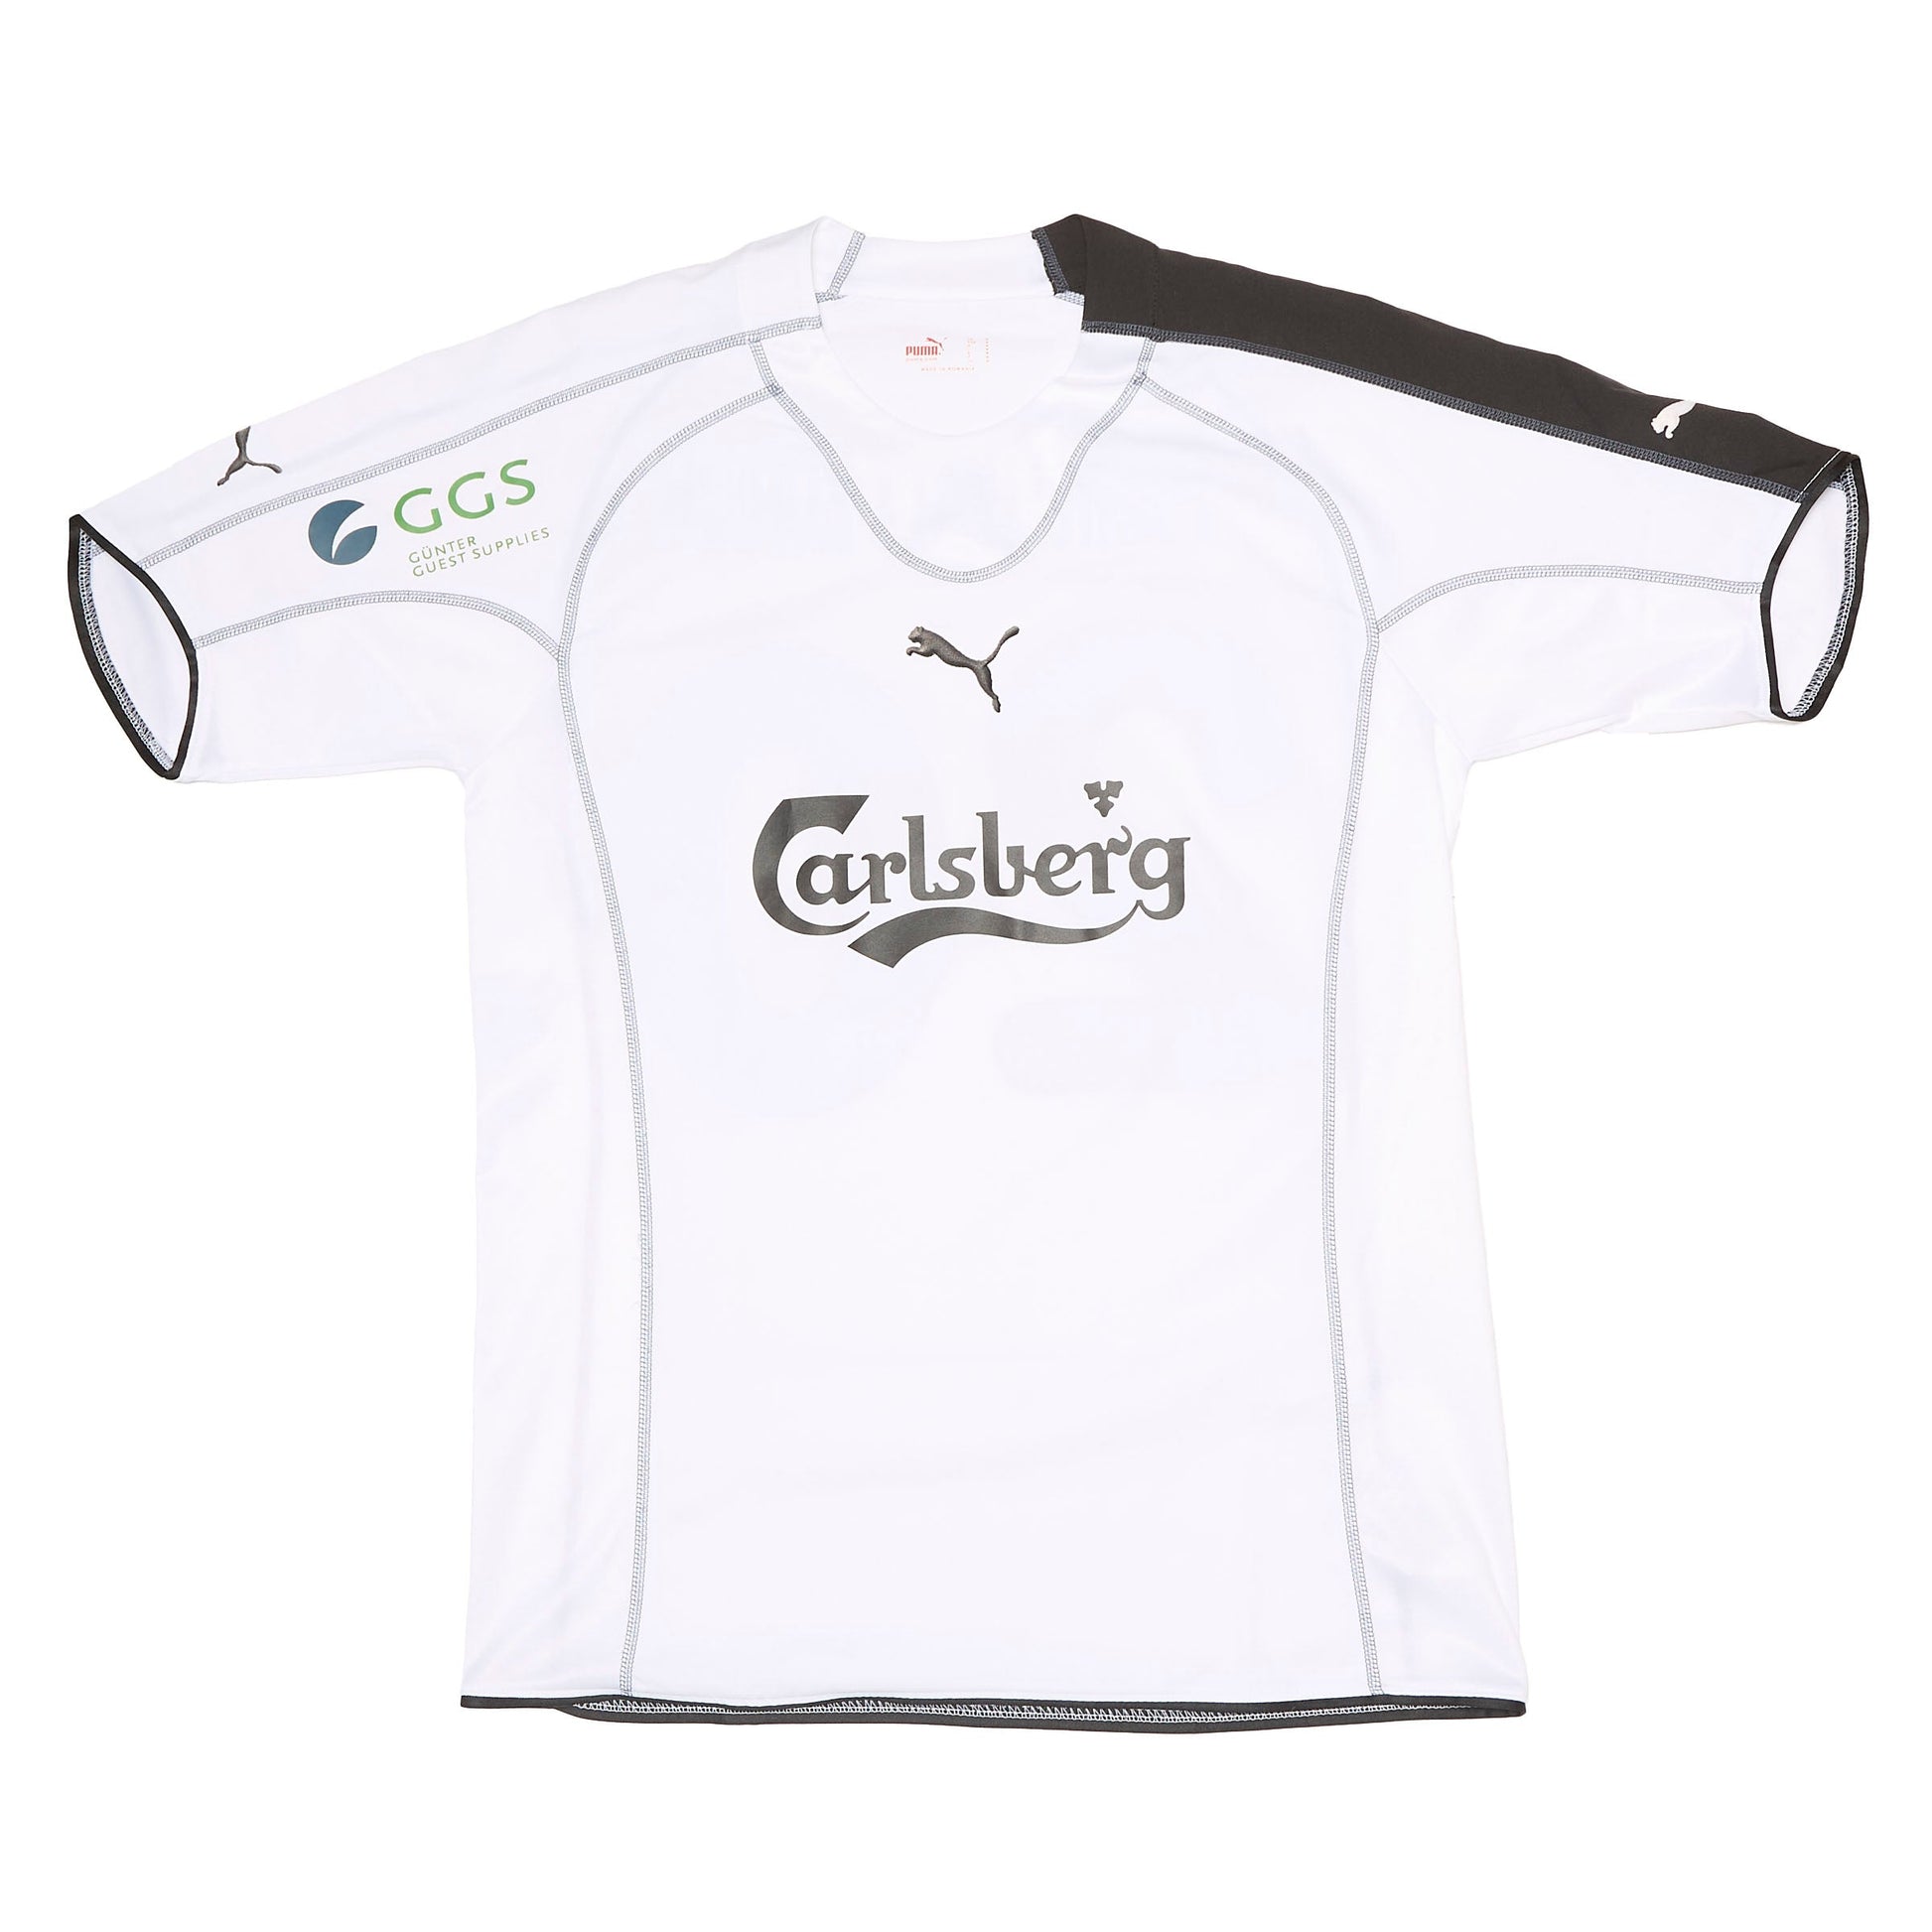 Puma Carlsberg Spellout Football Shirt - M